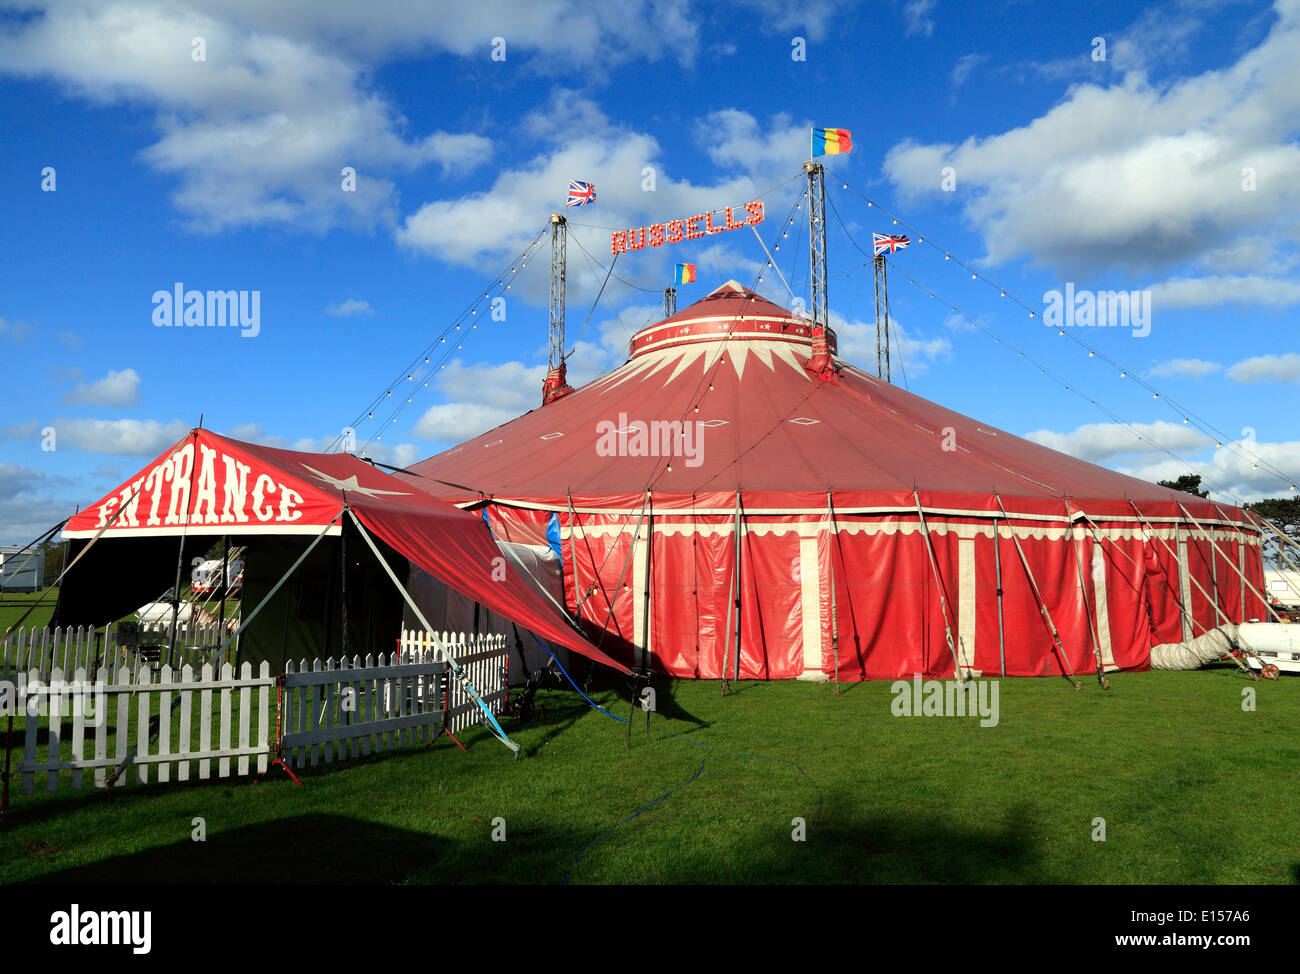 Russells International Circus, UK travelling circus shows, Big Top tent, Norfolk, England Stock Photo